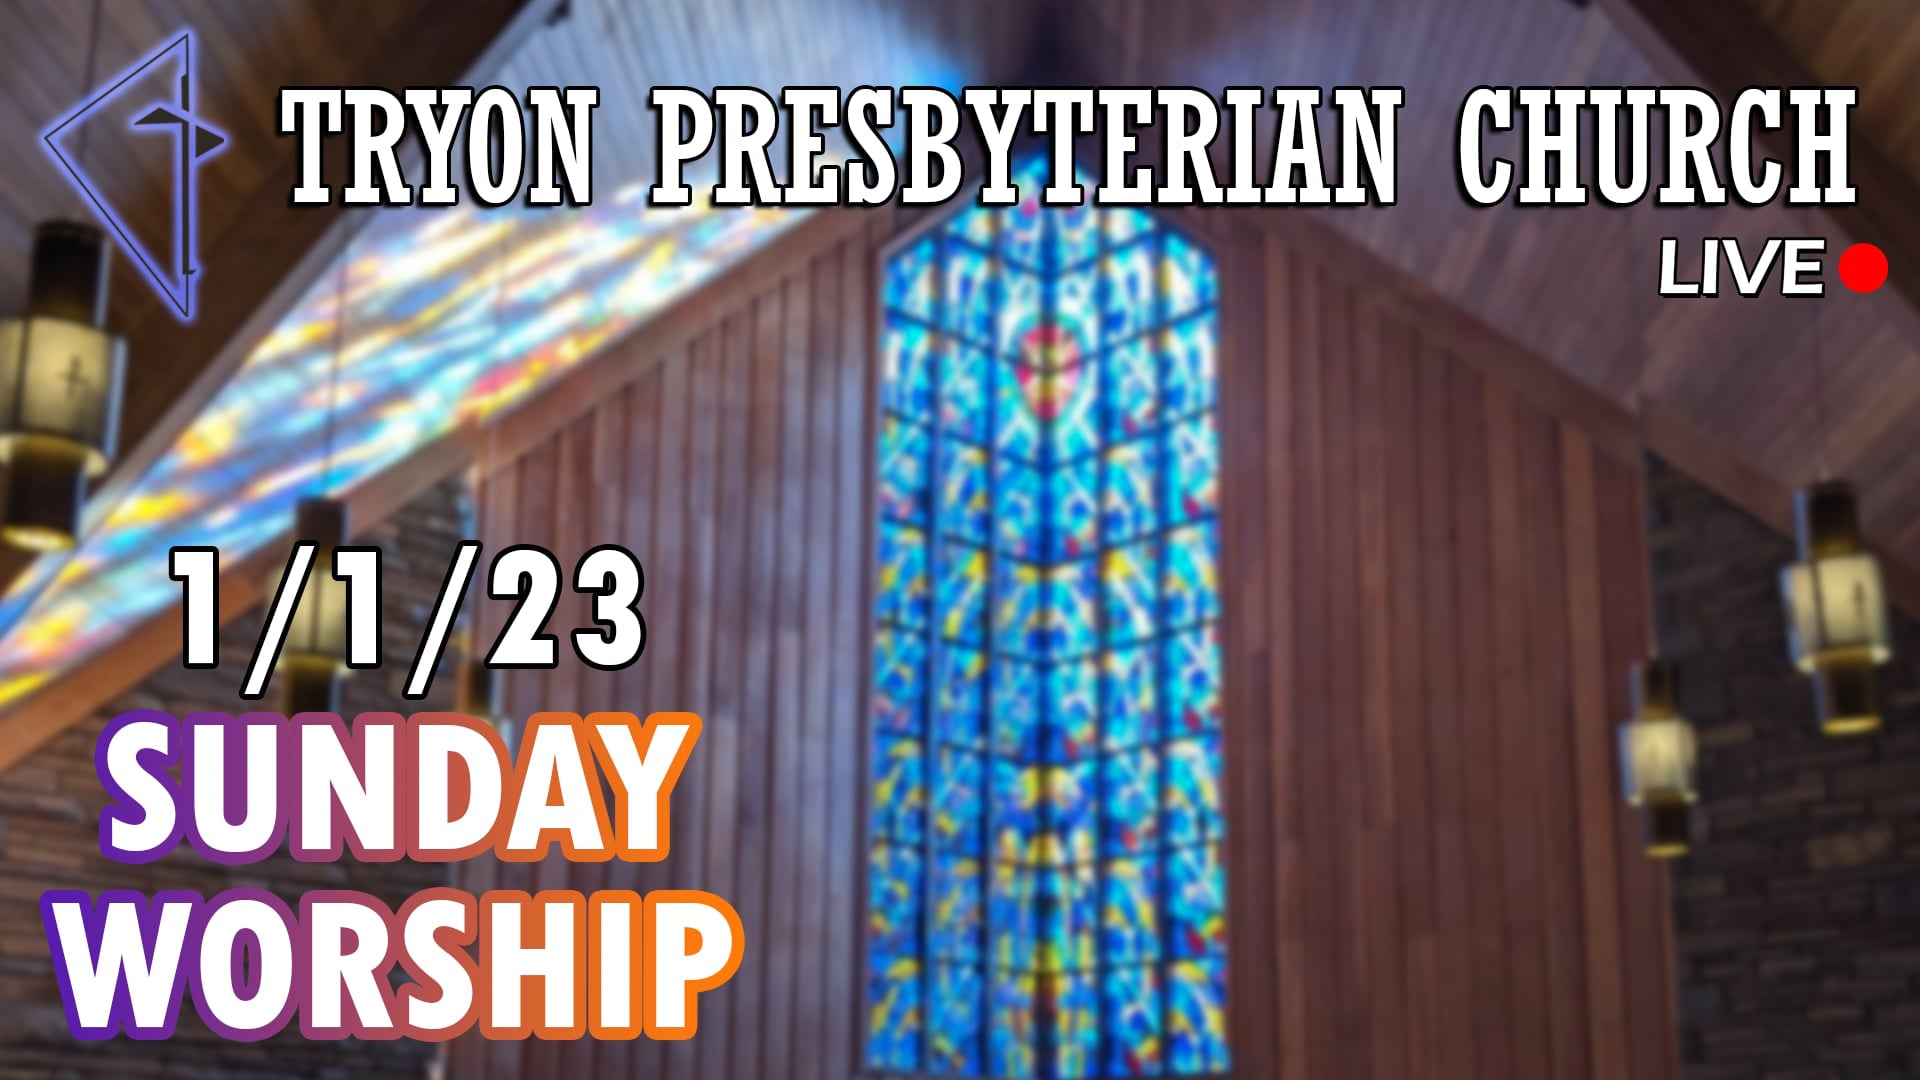 Tryon Presbyterian Church - Sunday Worship 1/1/23